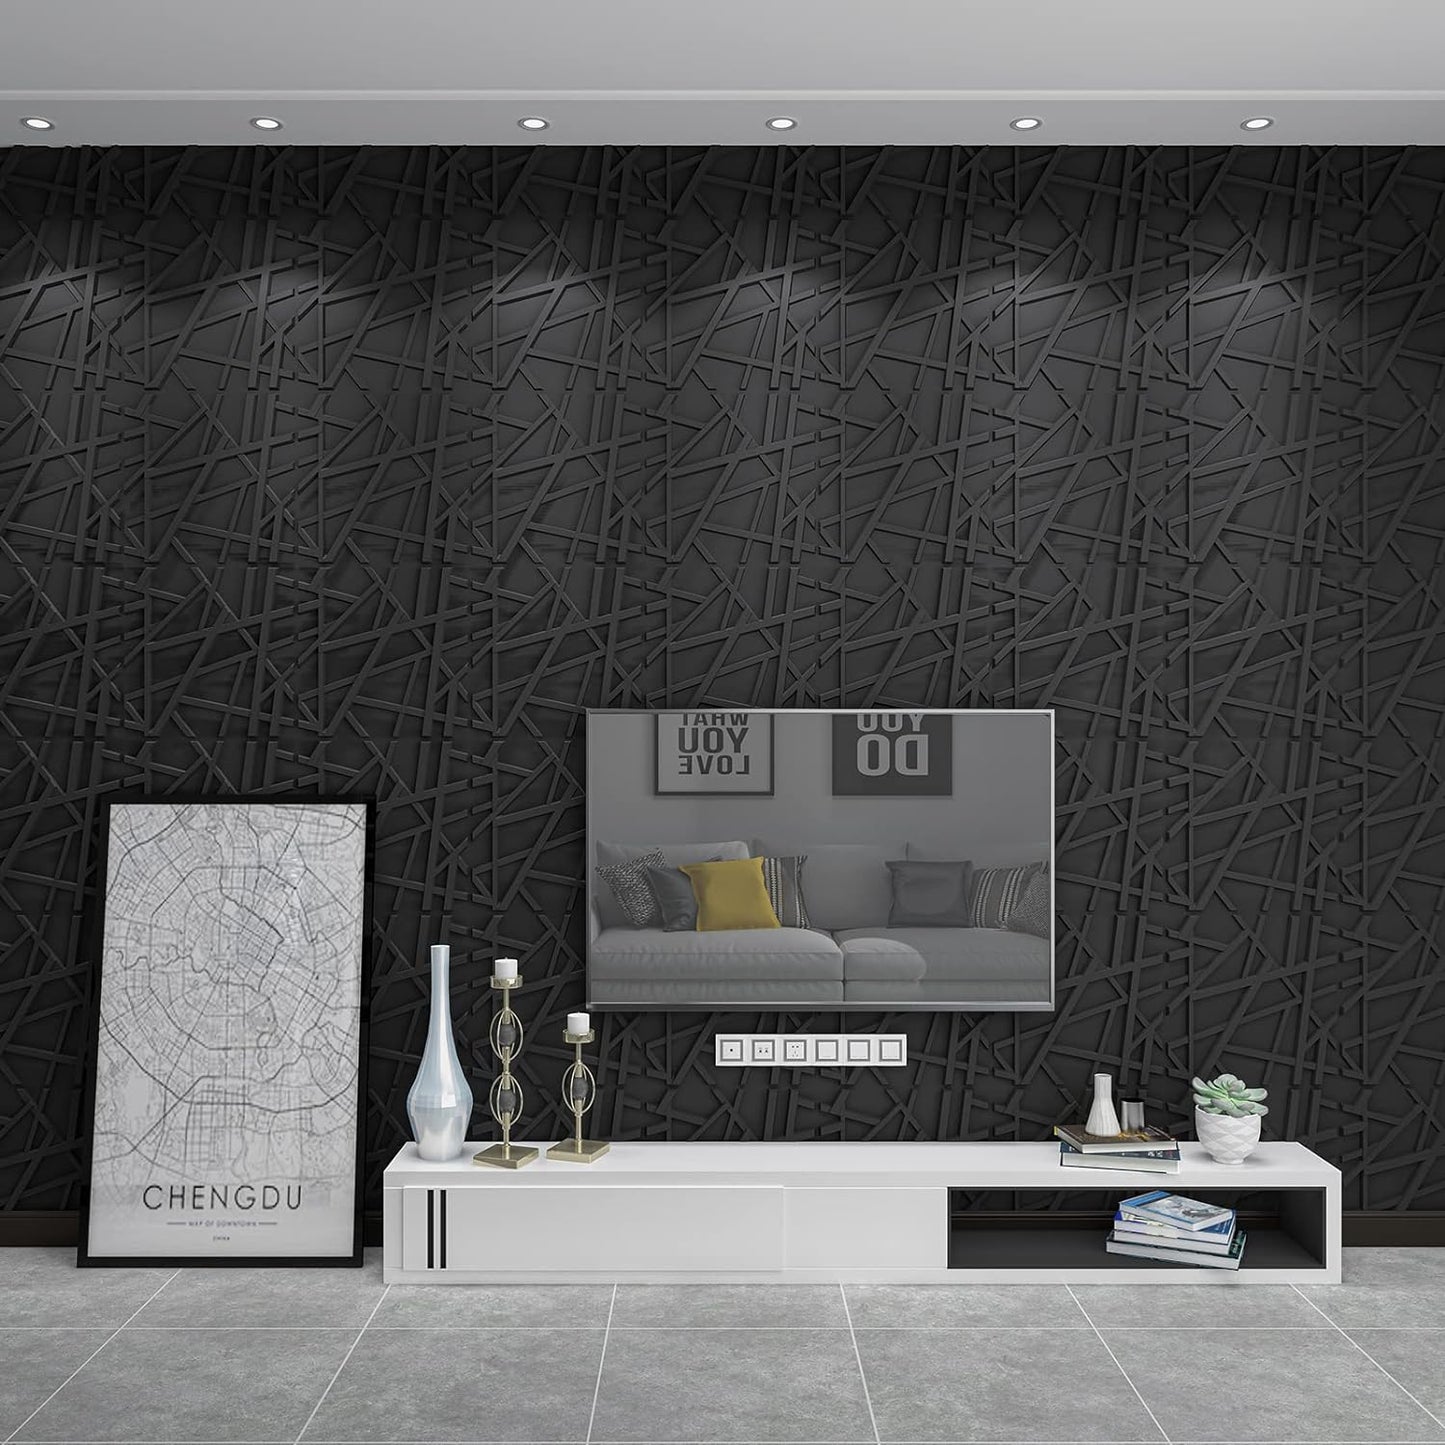 Art3d PVC Decorative Textures Black 3D Wall Panels for Interior Wall Décor, Black Wall Decor,Pack of 12 Tiles 32 Sq Ft